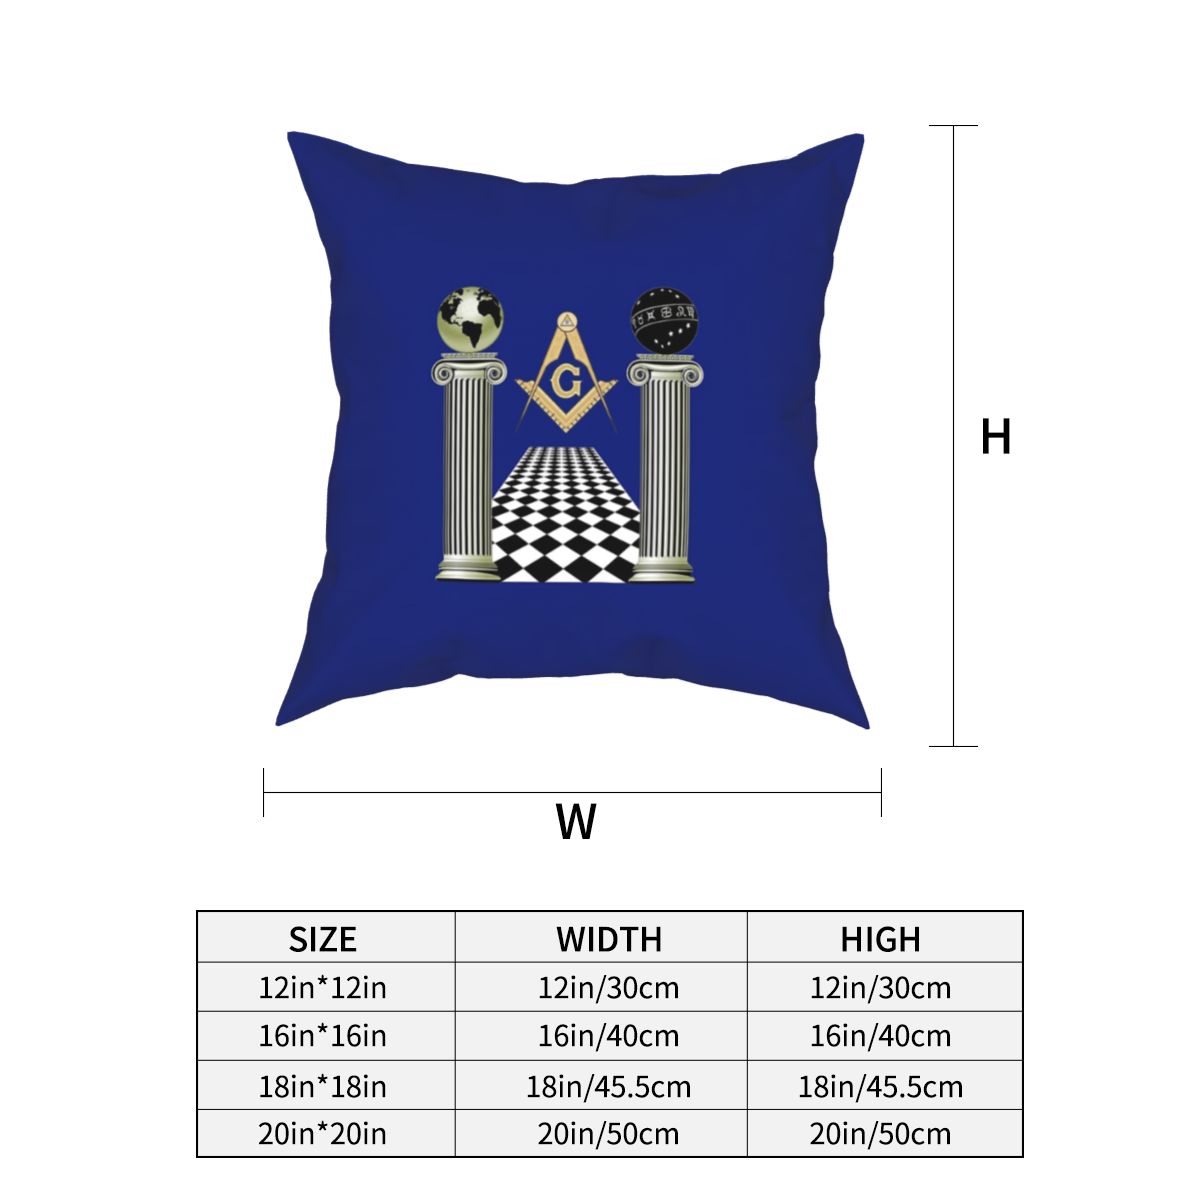 Master Mason Blue Lodge Pillowcase - Compass And Square Solomon's Temple Blue - Bricks Masons